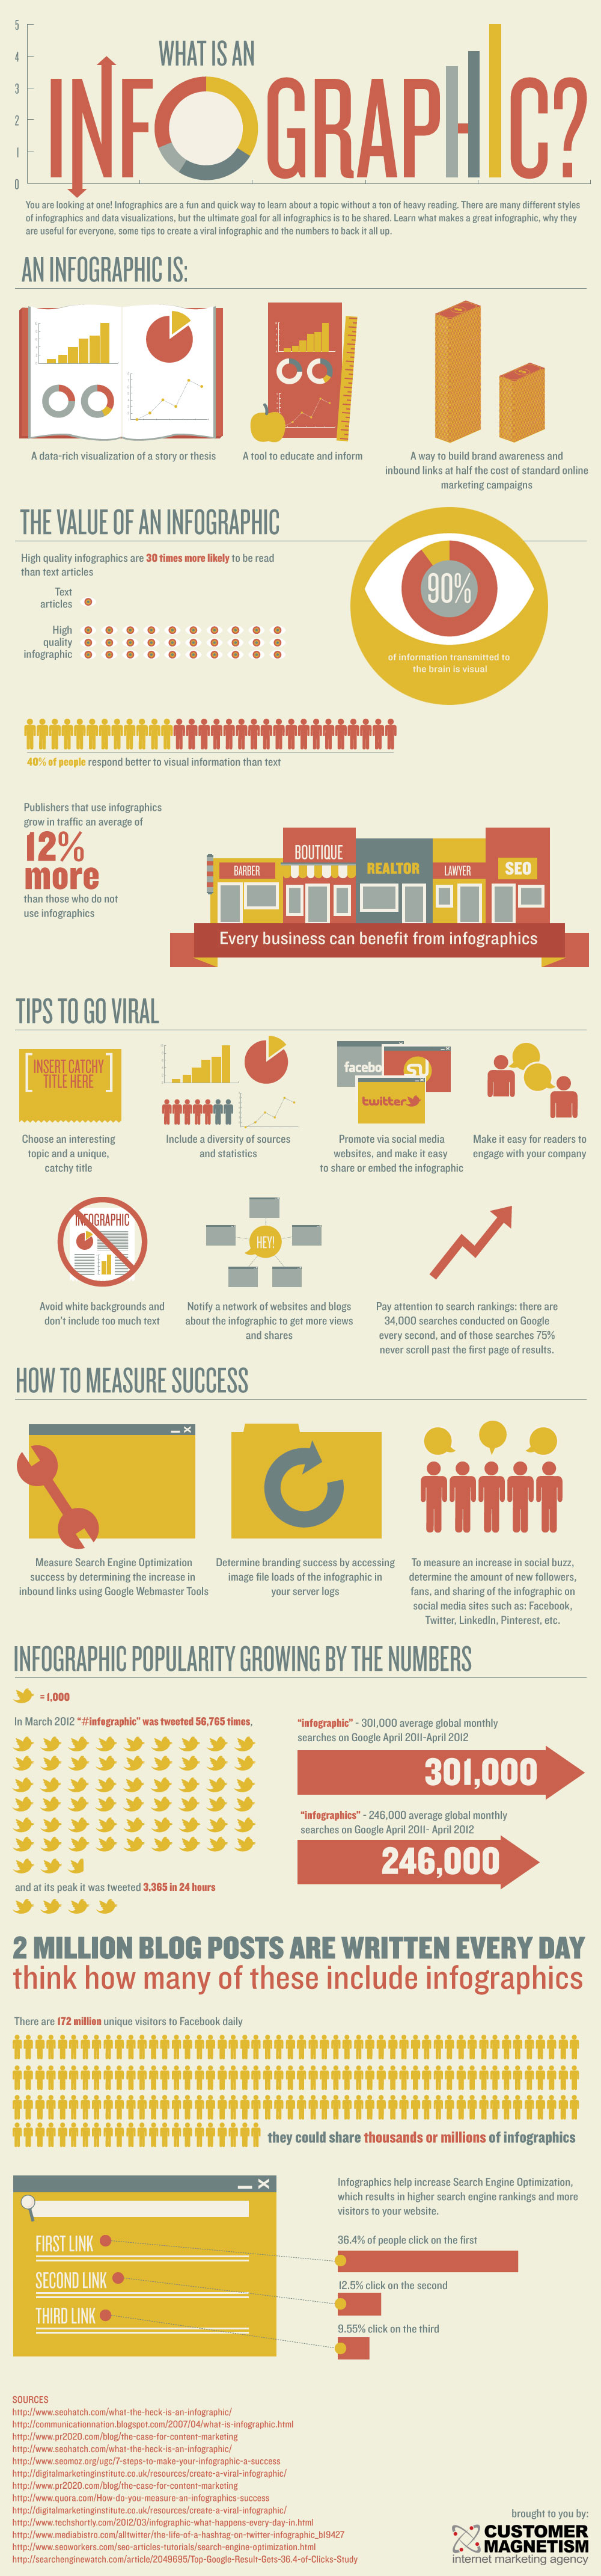 10 Ways to Use Infographics